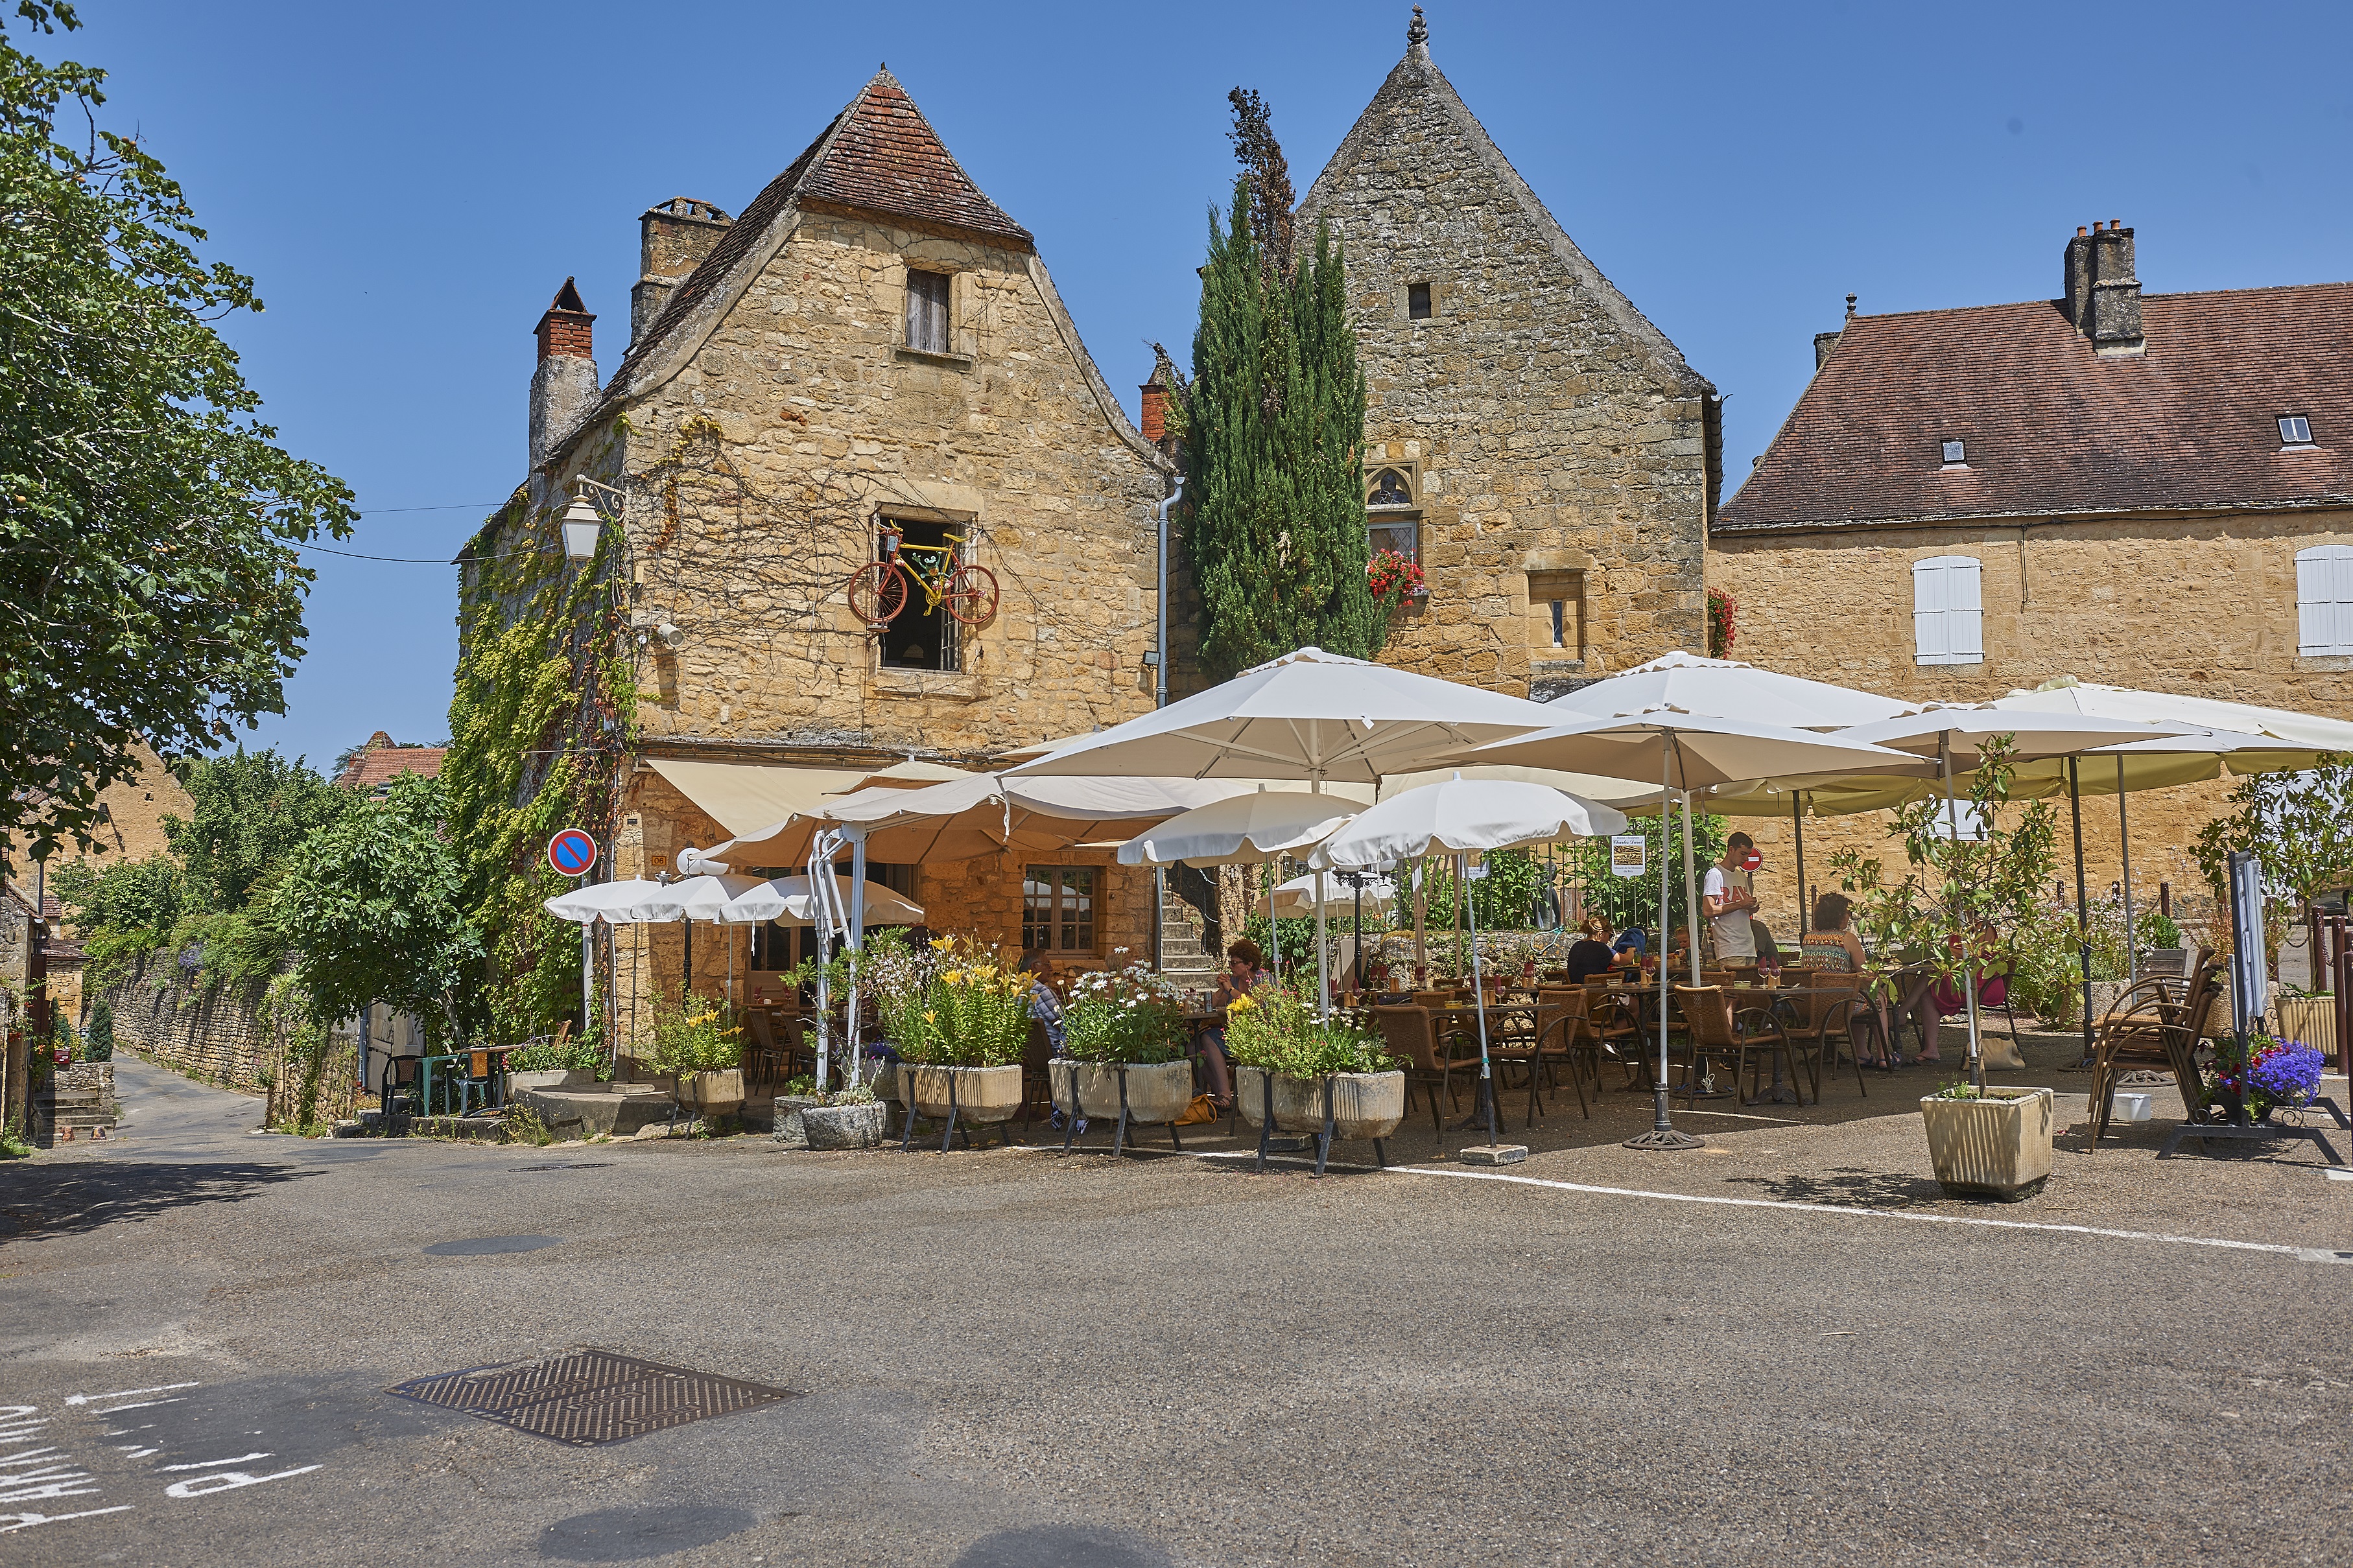 Domme - tourist village in the Dordogne 